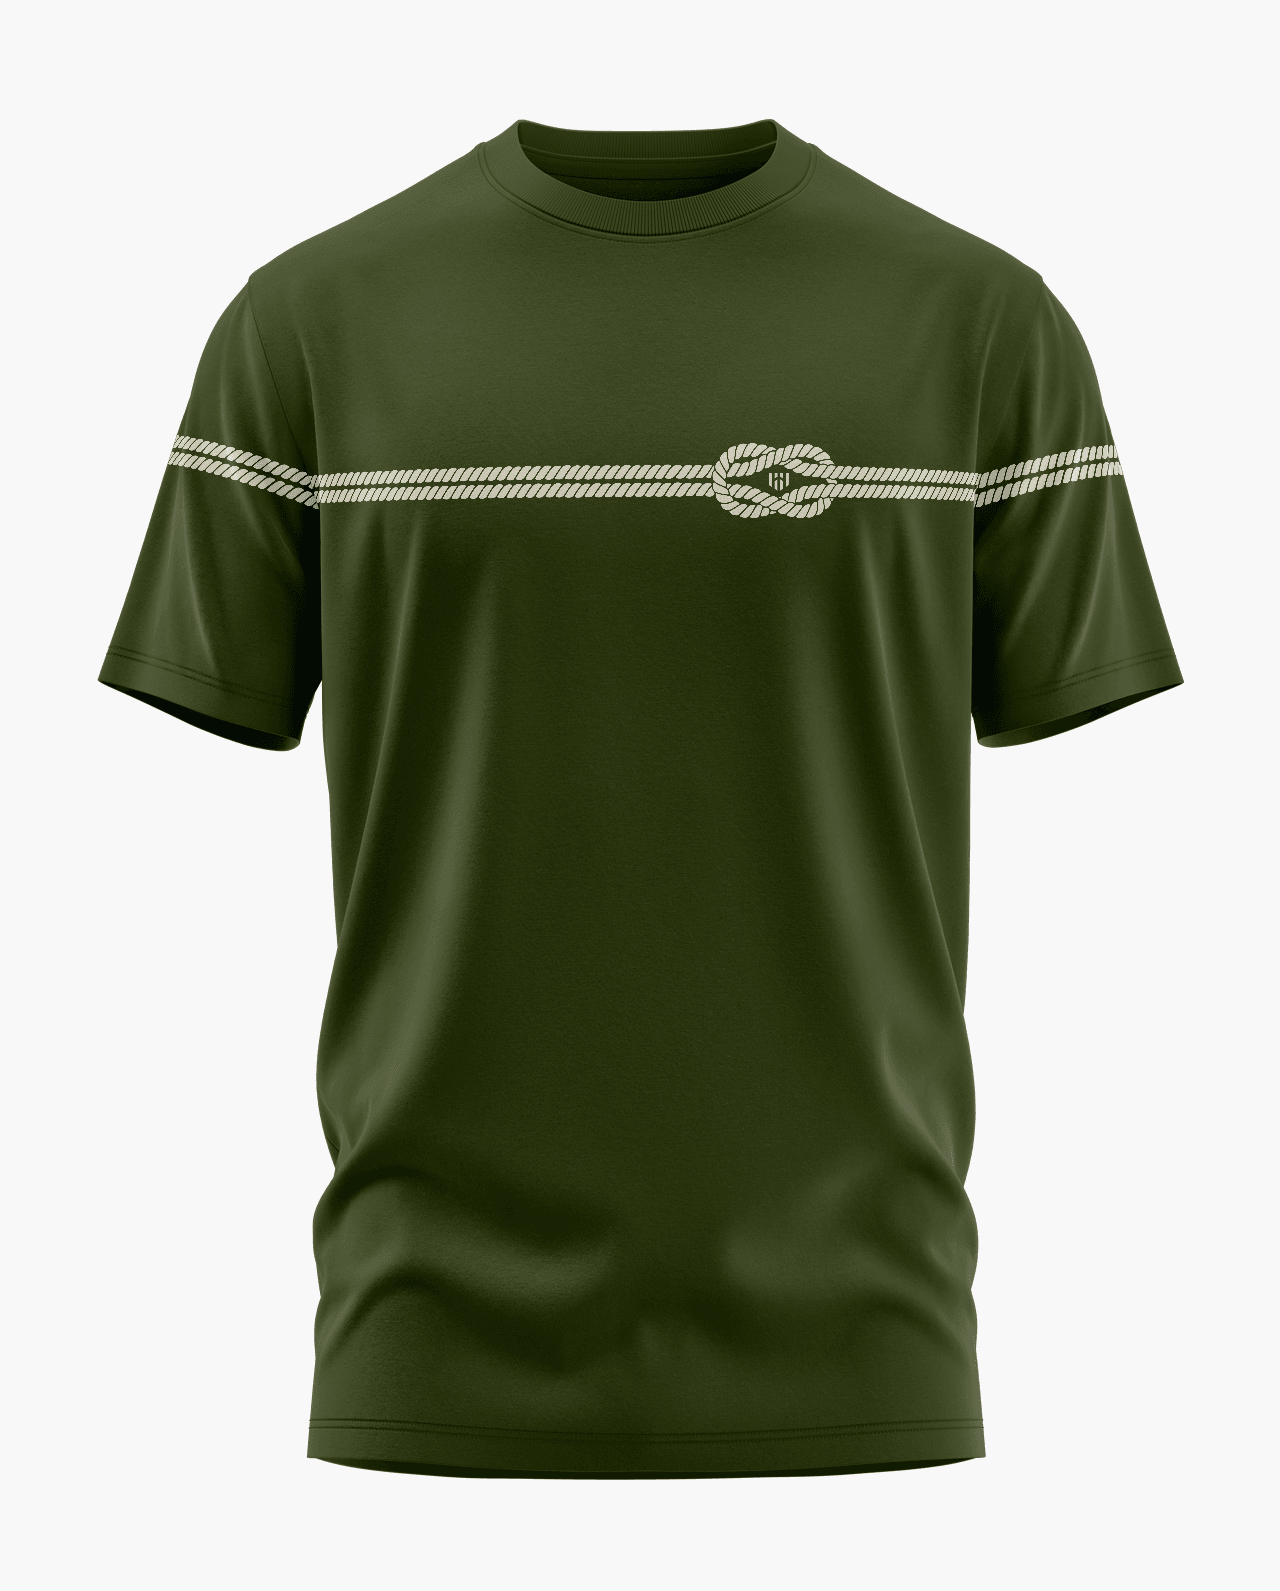 Square Knot Rope T-Shirt - Aero Armour